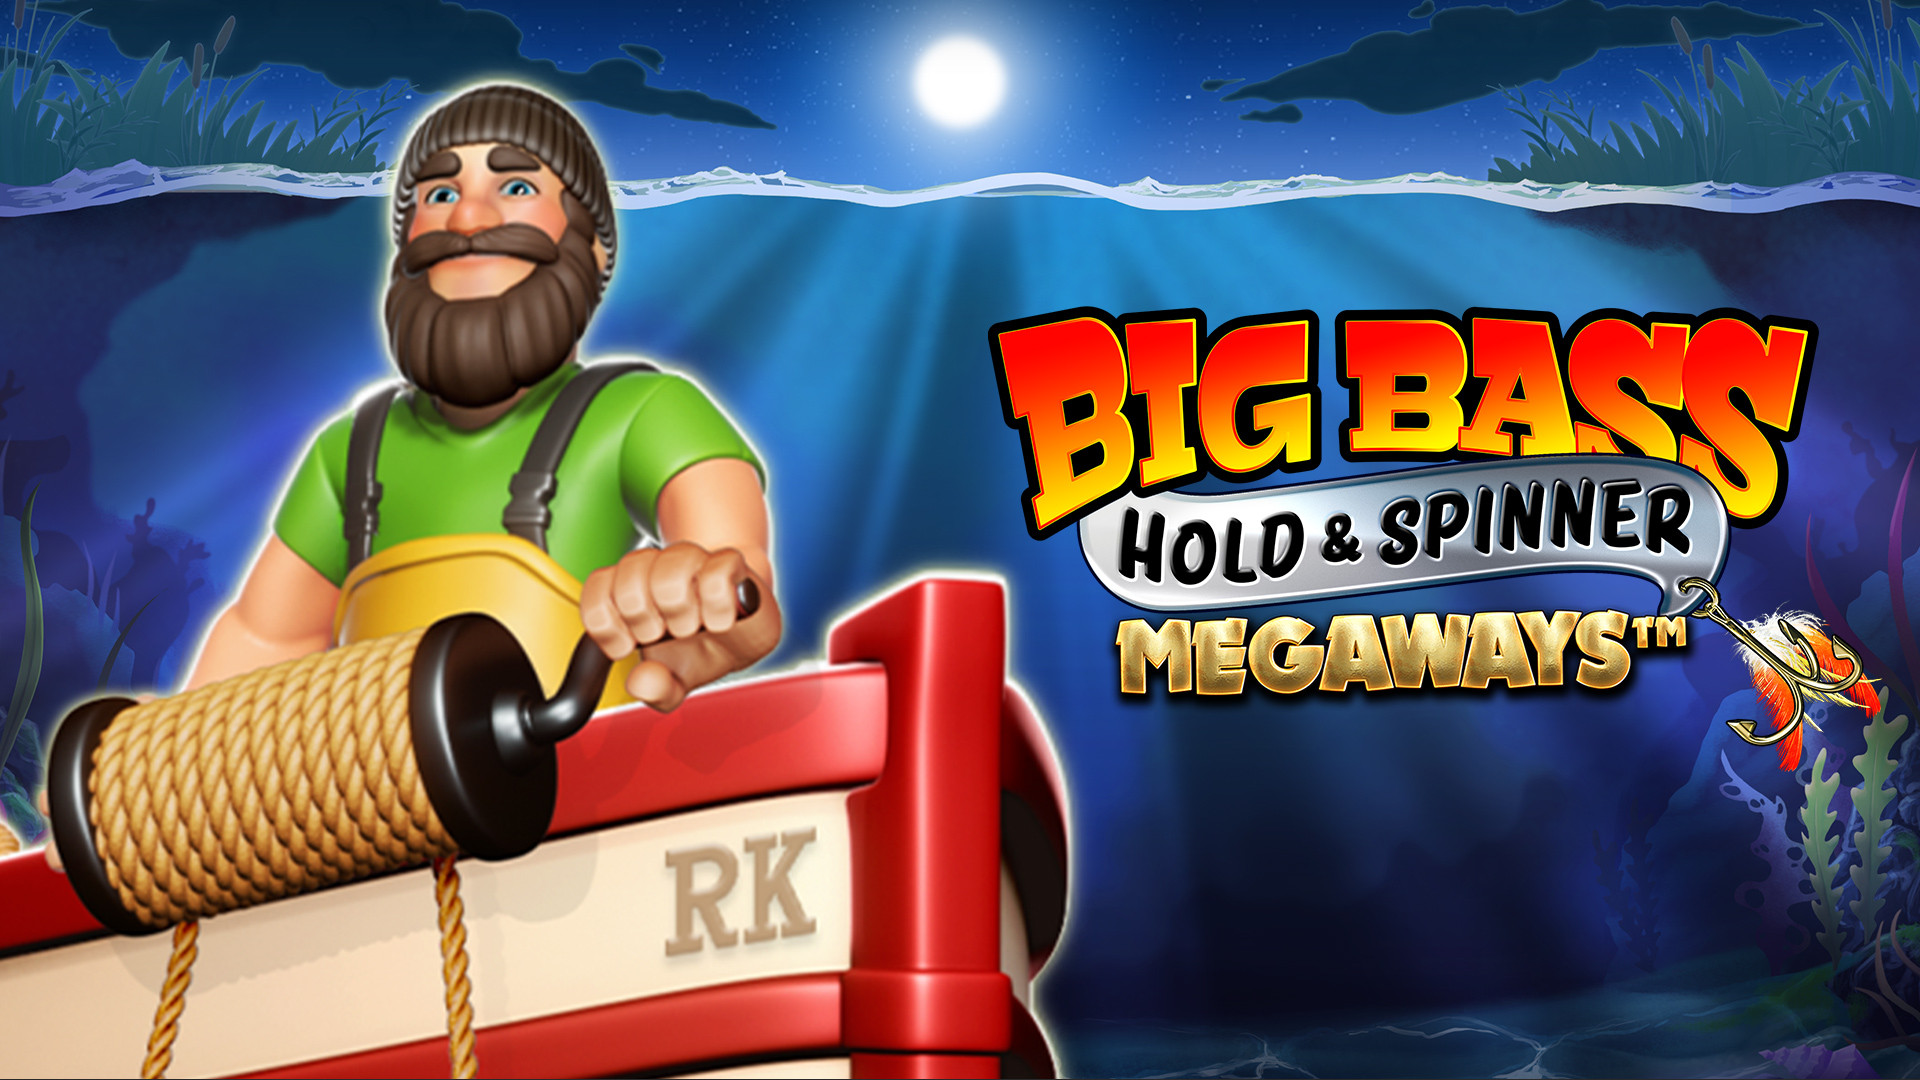 Big Bass Hold & Spinner MEGAWAYS